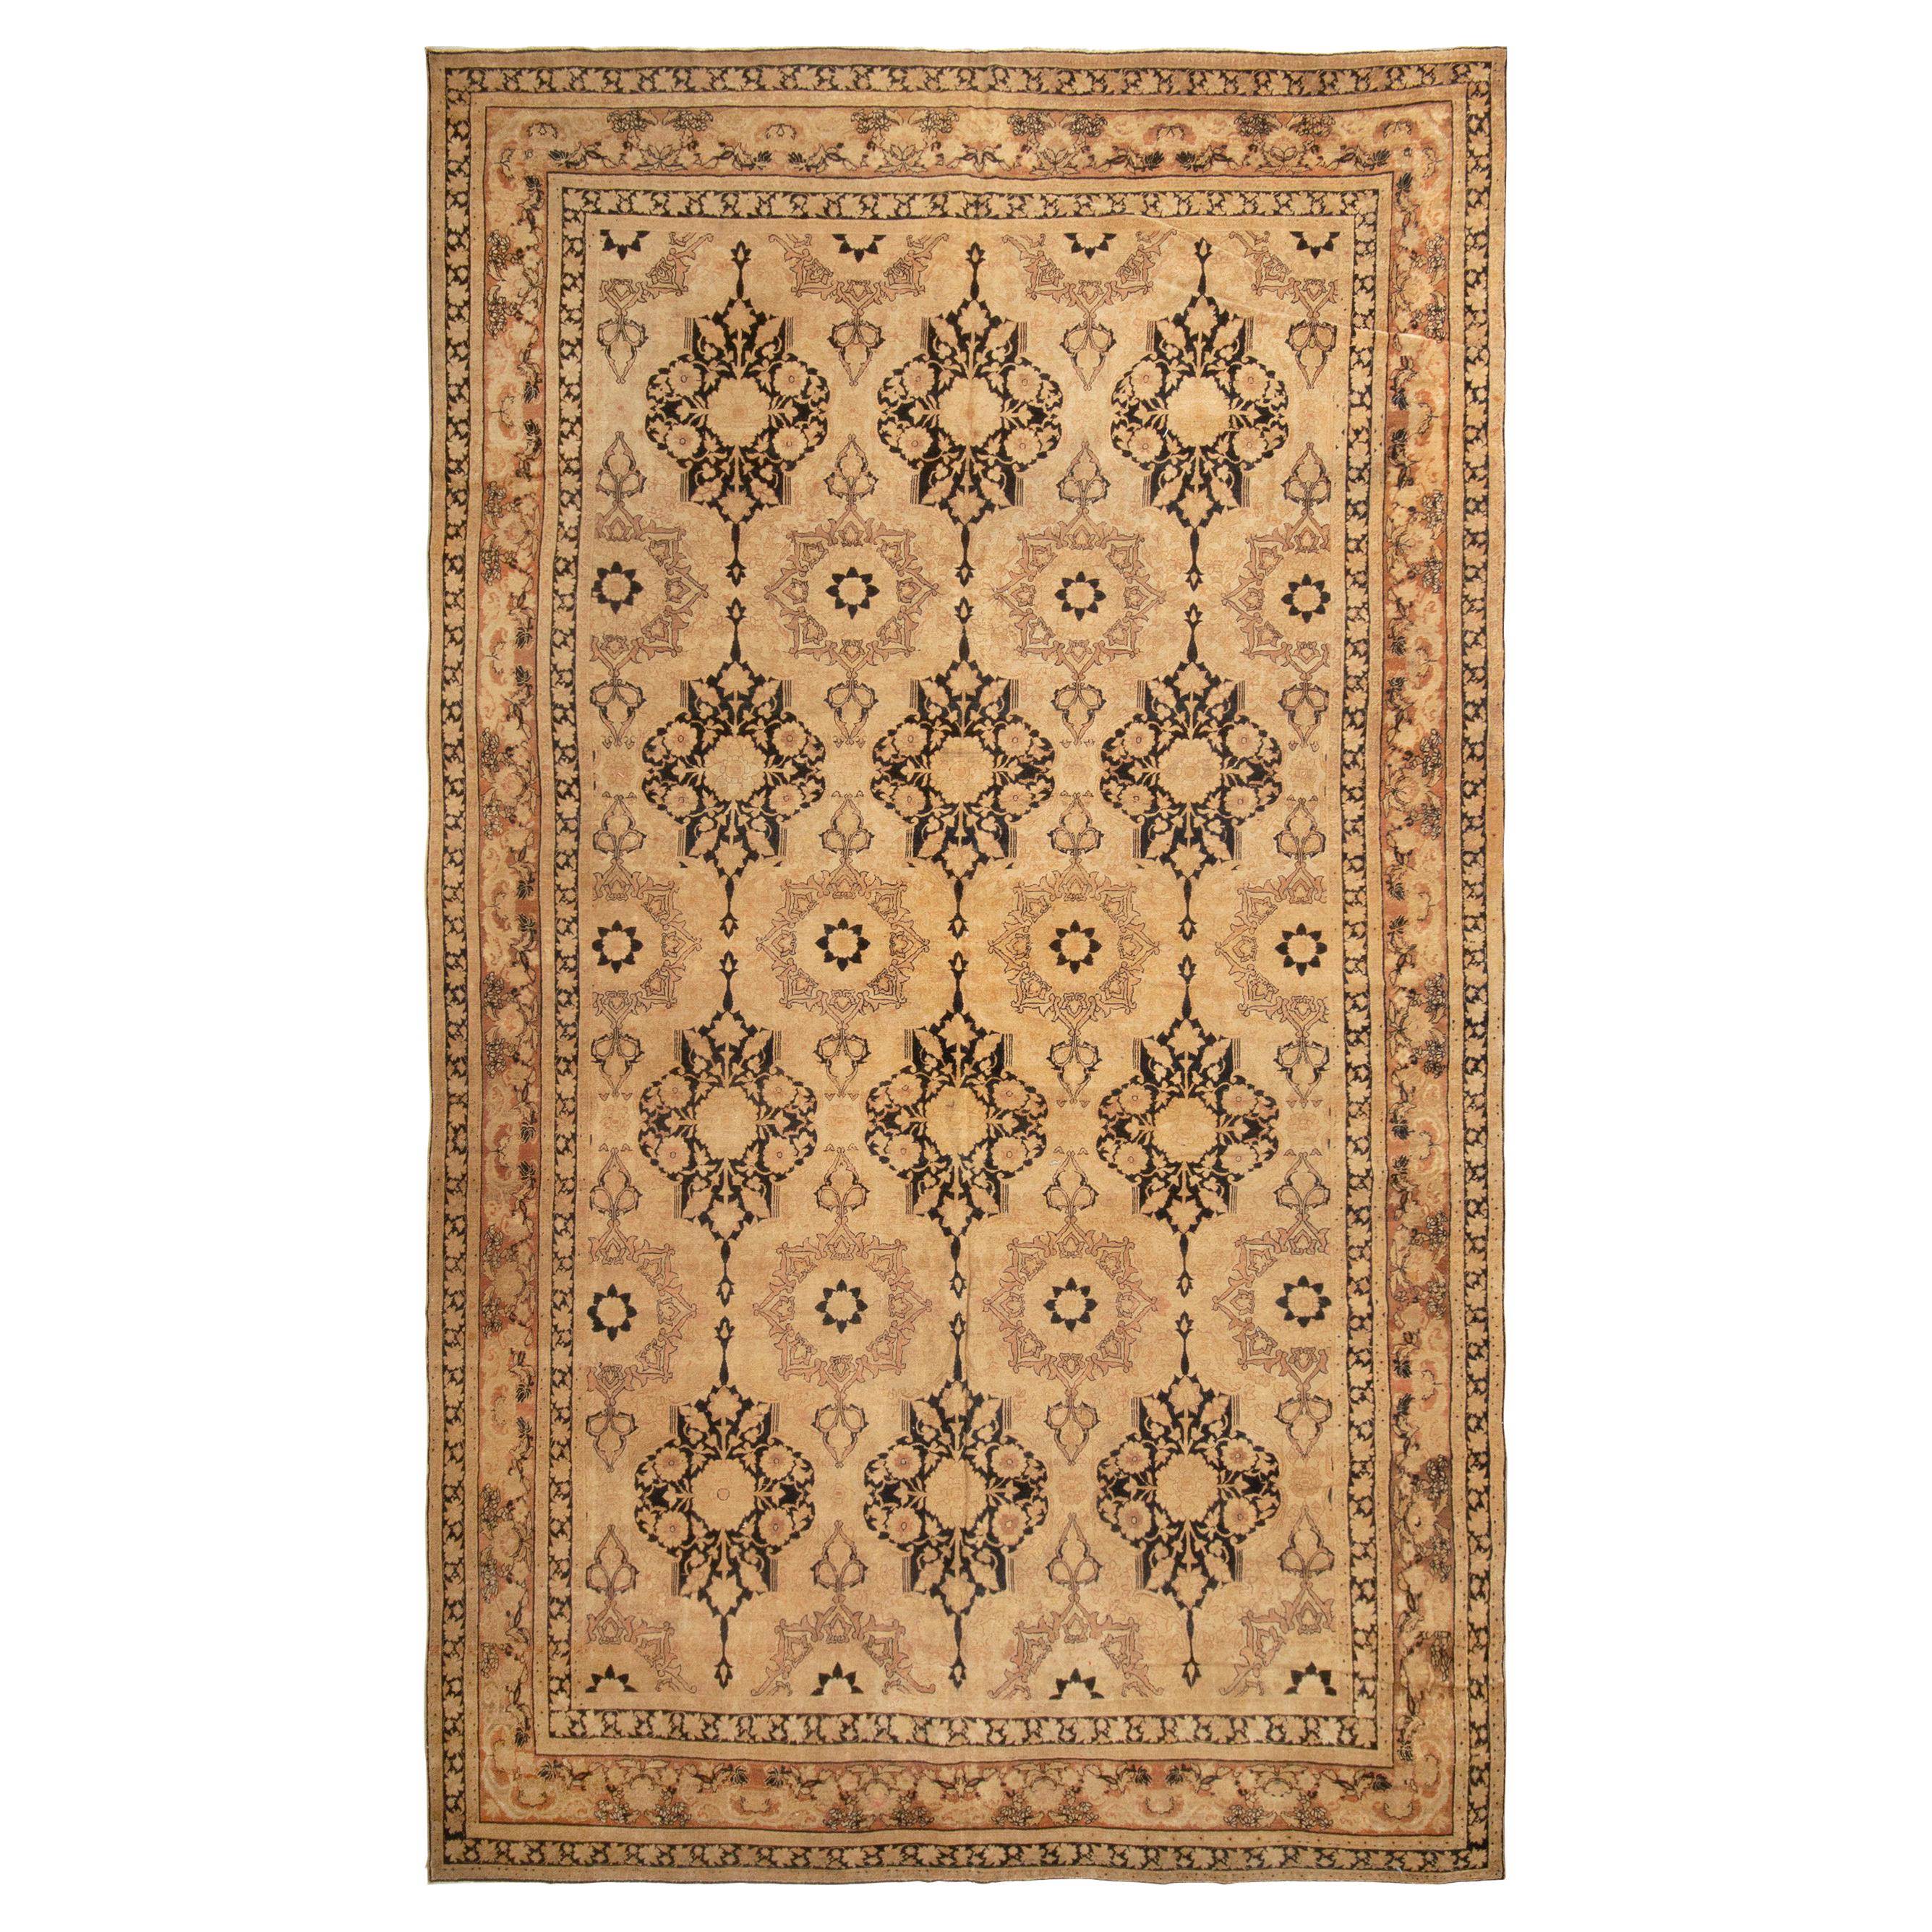 Antique Kerman Lavar Persian Rug in Beige-Brown Floral Pattern